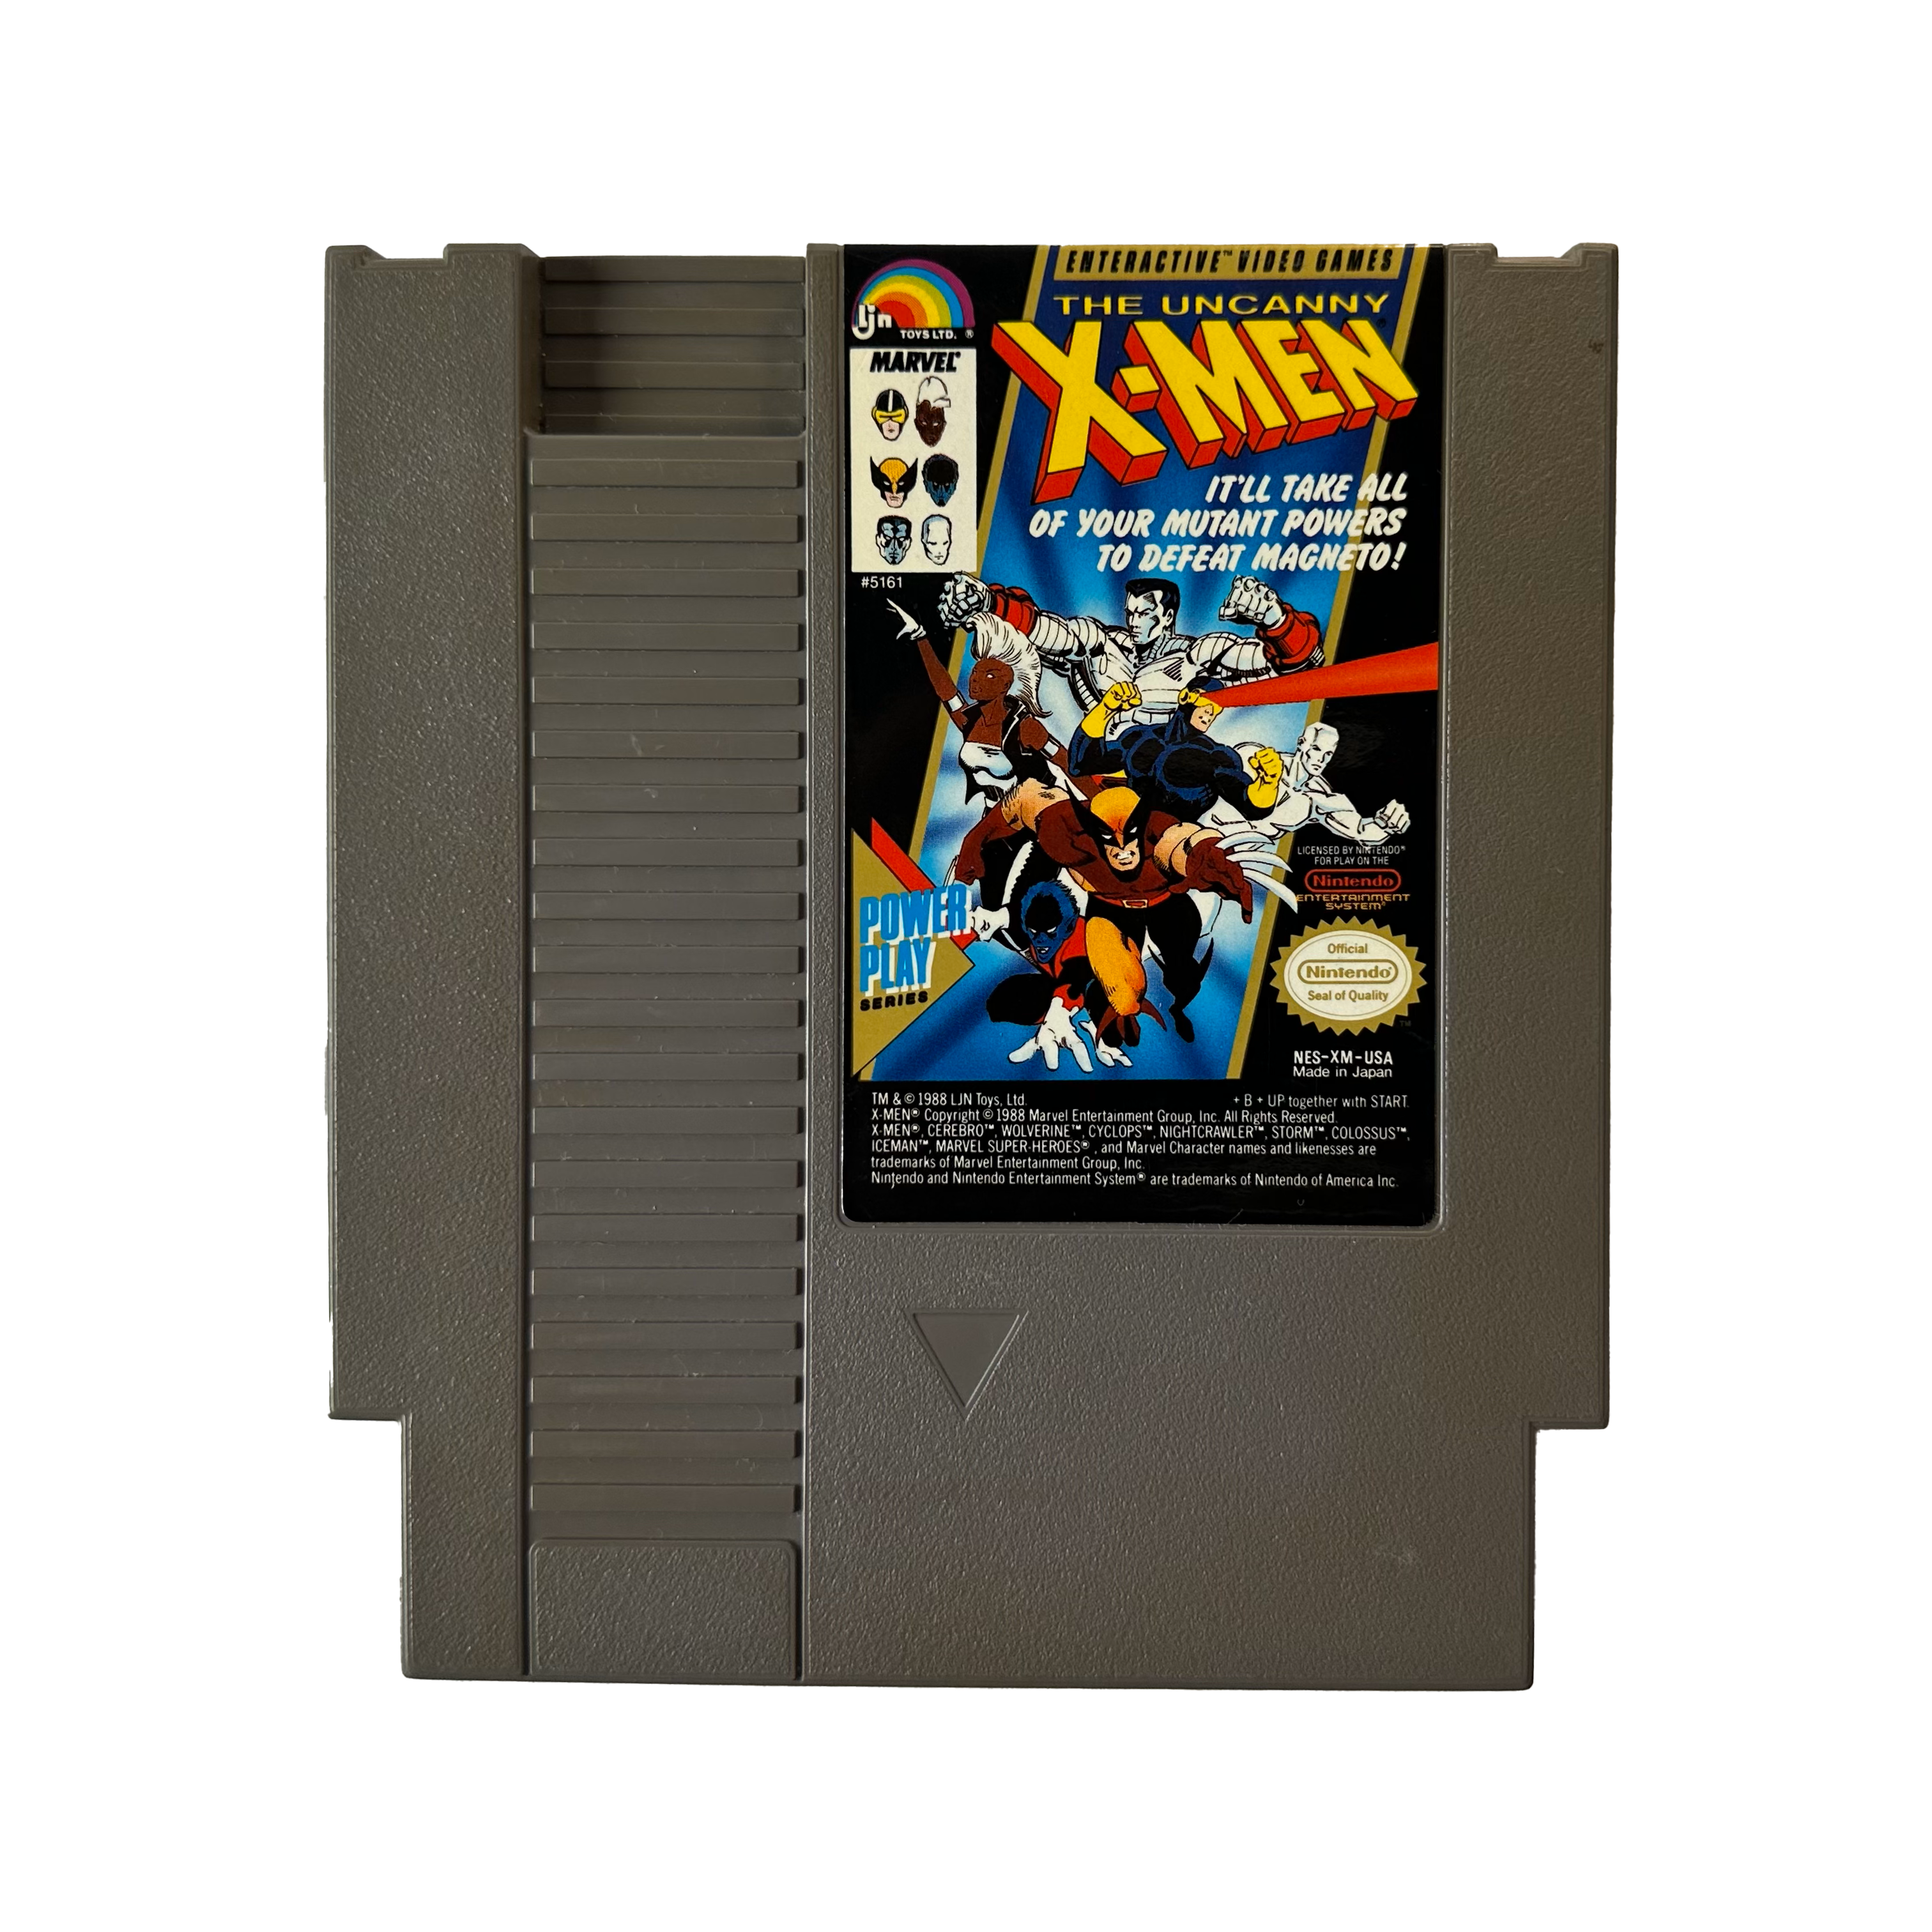 The Uncanny X-Men for NES | Bitjump